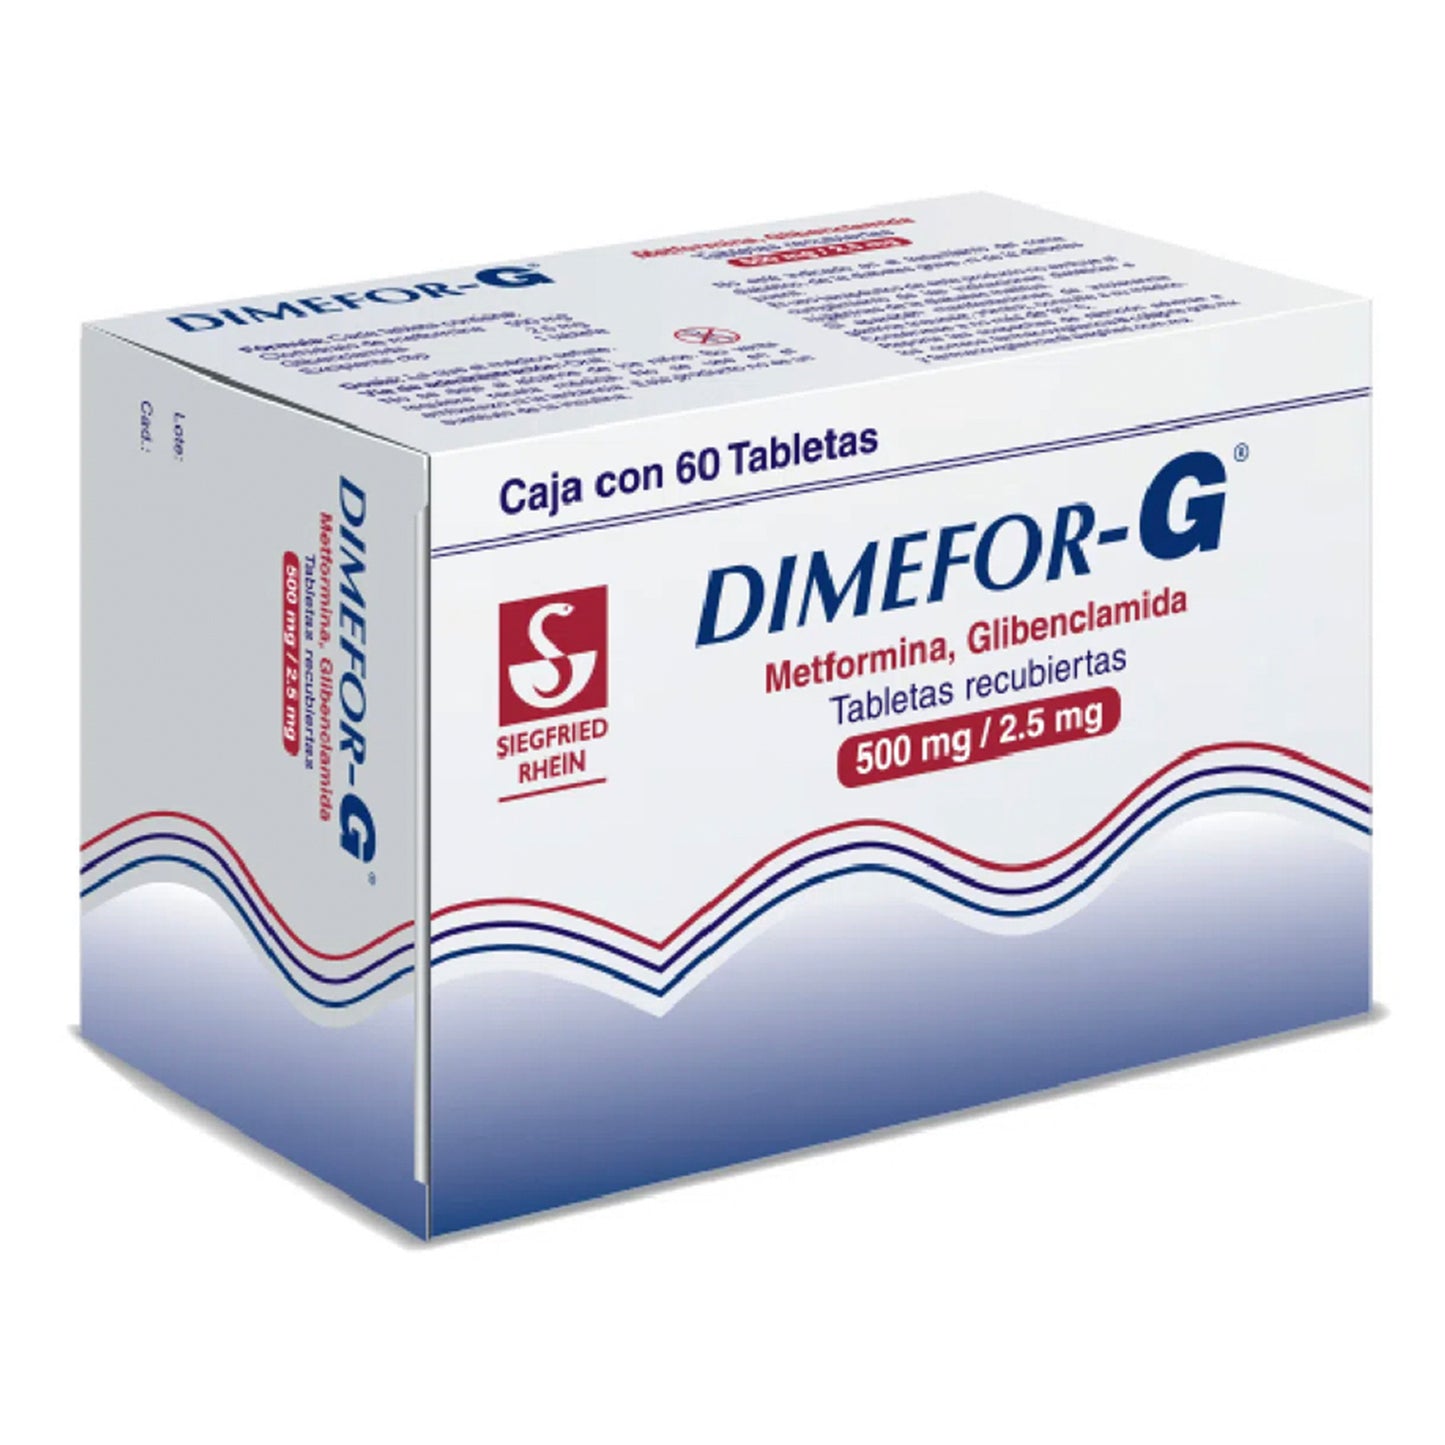 Dimefor G 500/2.5 mg, caja con 60 tabletas.